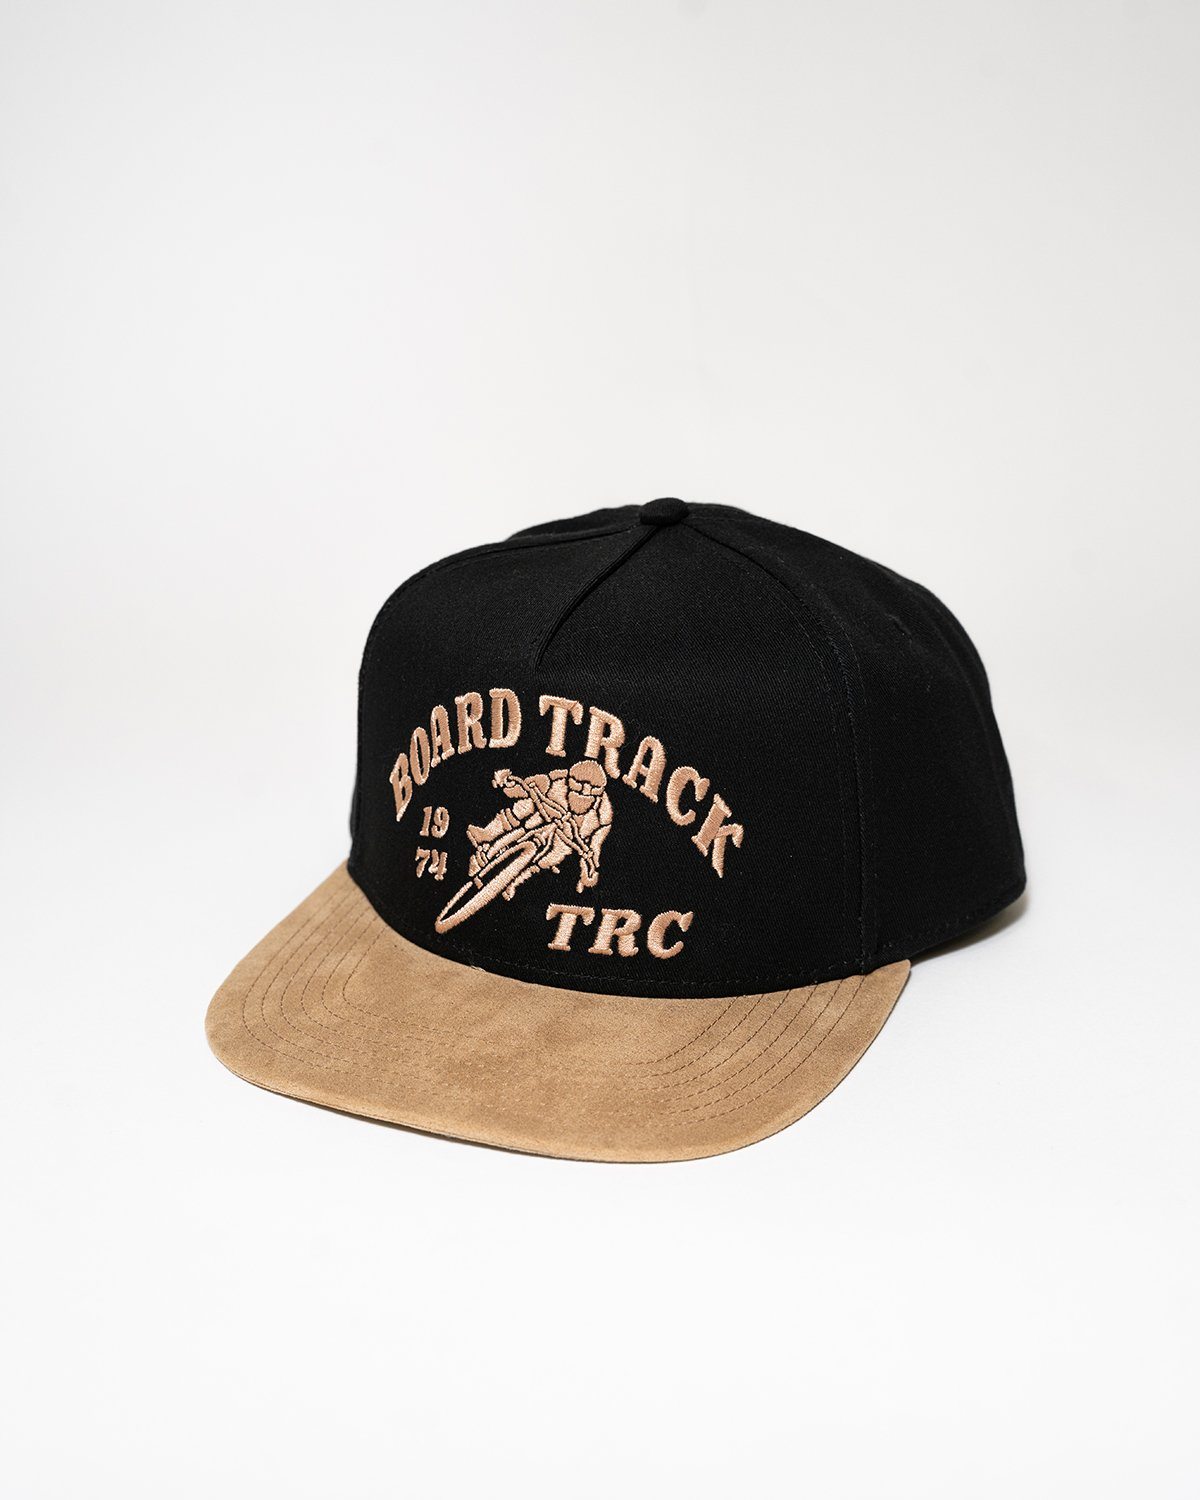 Trc Board Track Snapback Sand/Black Cap The Rokker Company 